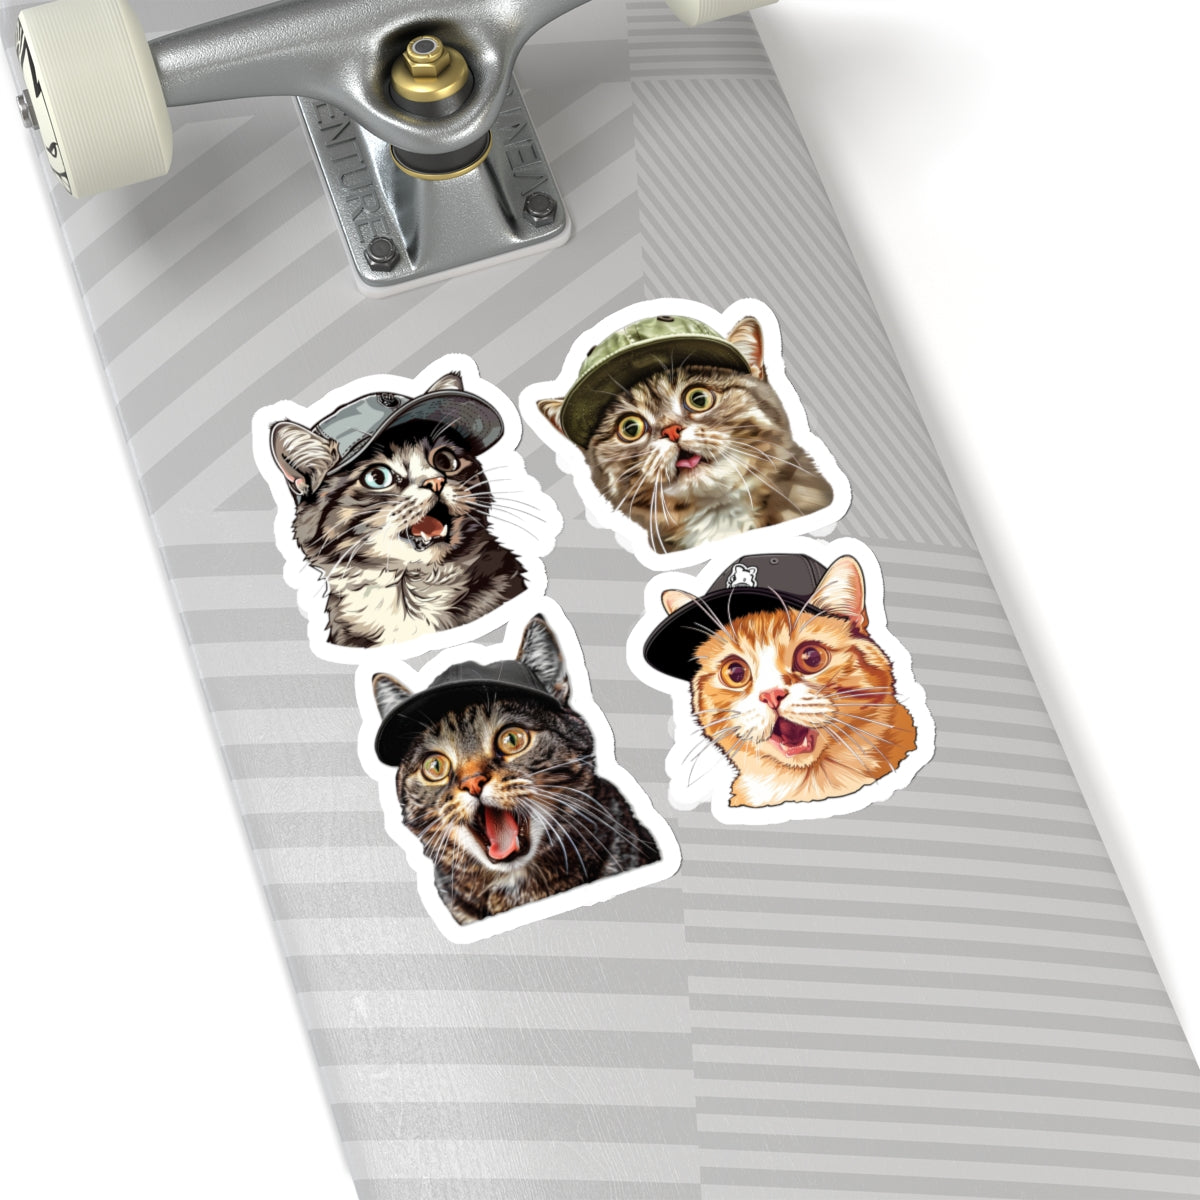 Cool Snooty cats meme Kiss-Cut Sticker